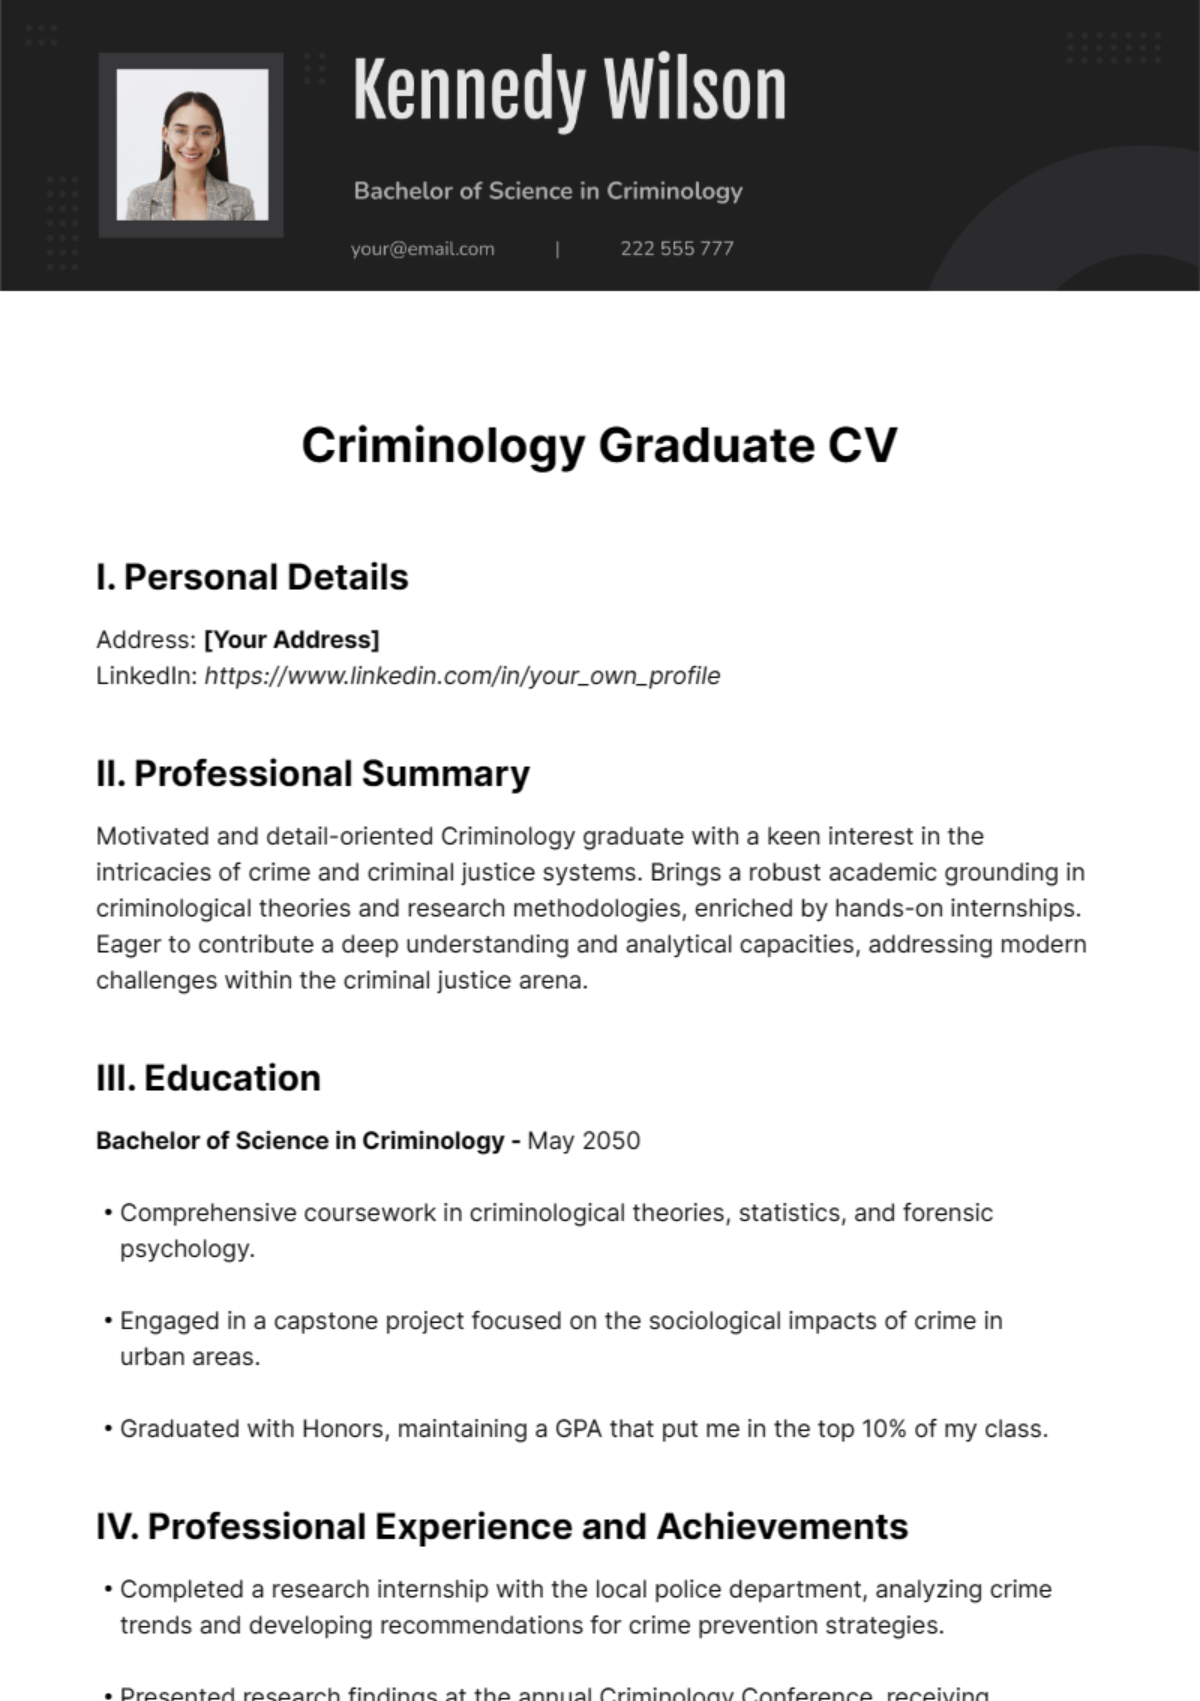 Criminology Graduate CV Template